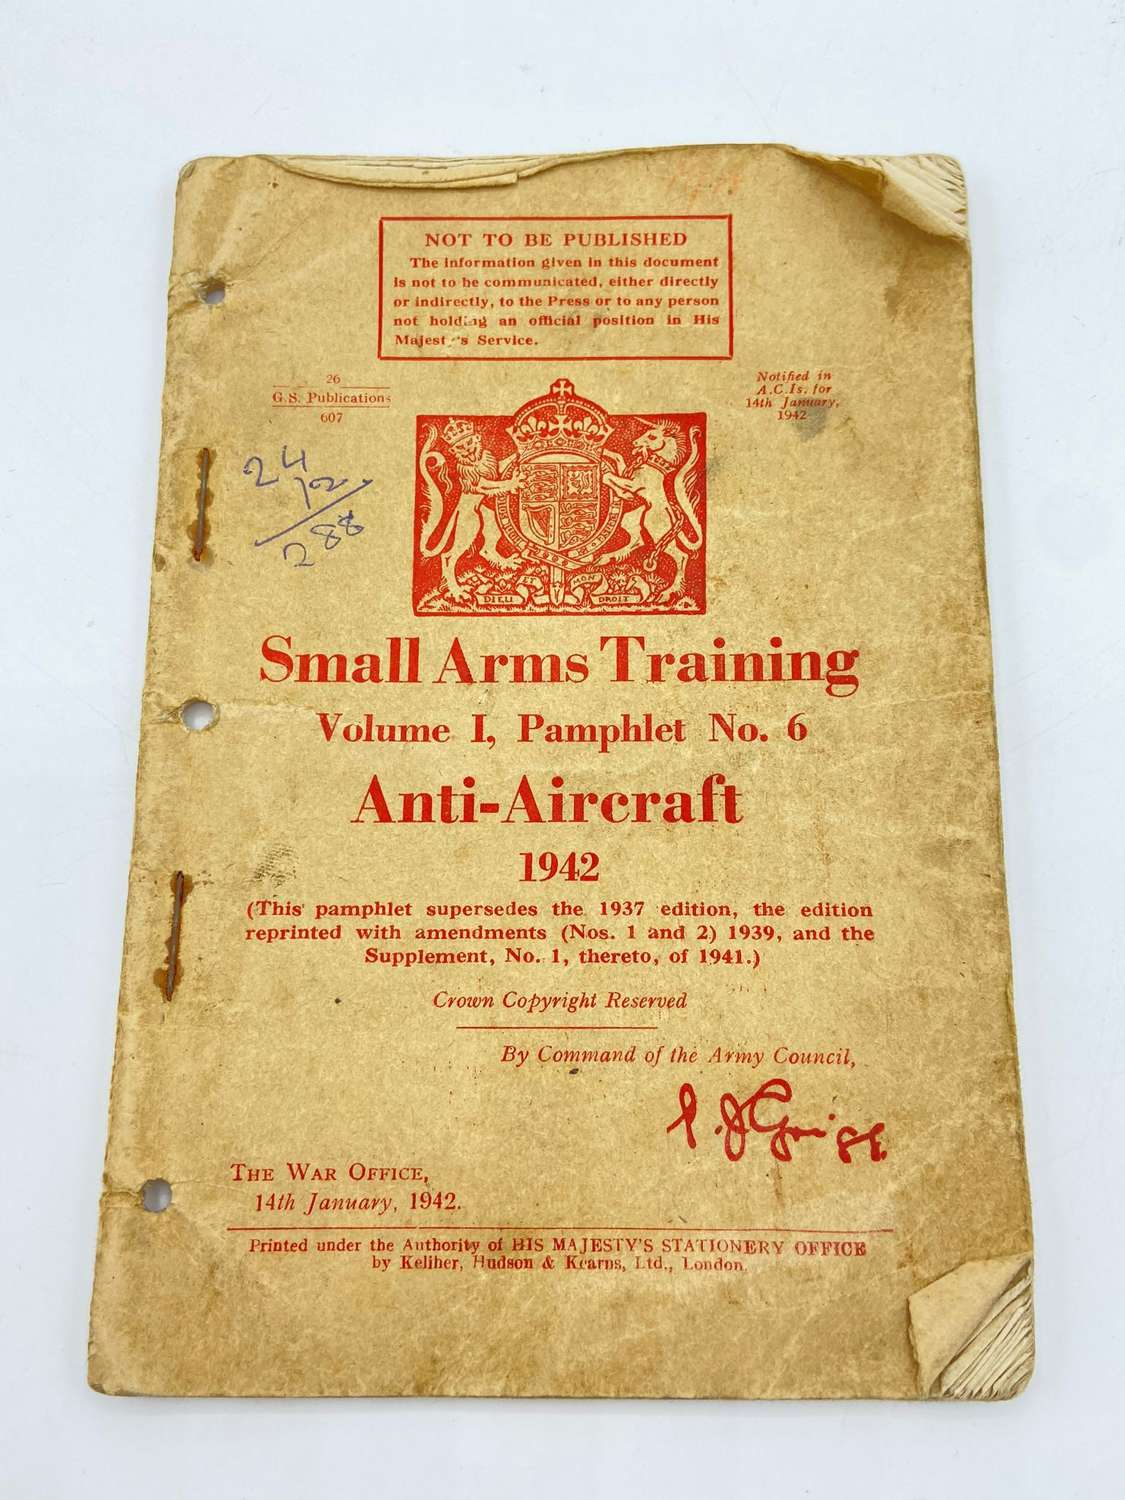 WW2 British Small Arms Training Anti-Aircraft 1942 Publication